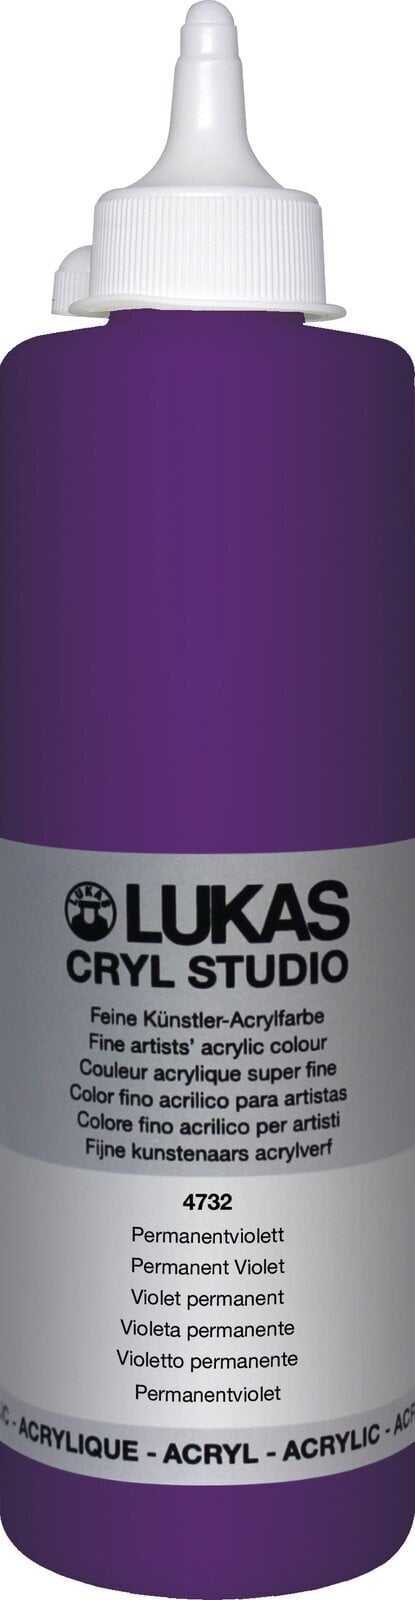 Acrylfarbe Lukas Cryl Studio Acrylfarbe 500 ml Permanent Violet